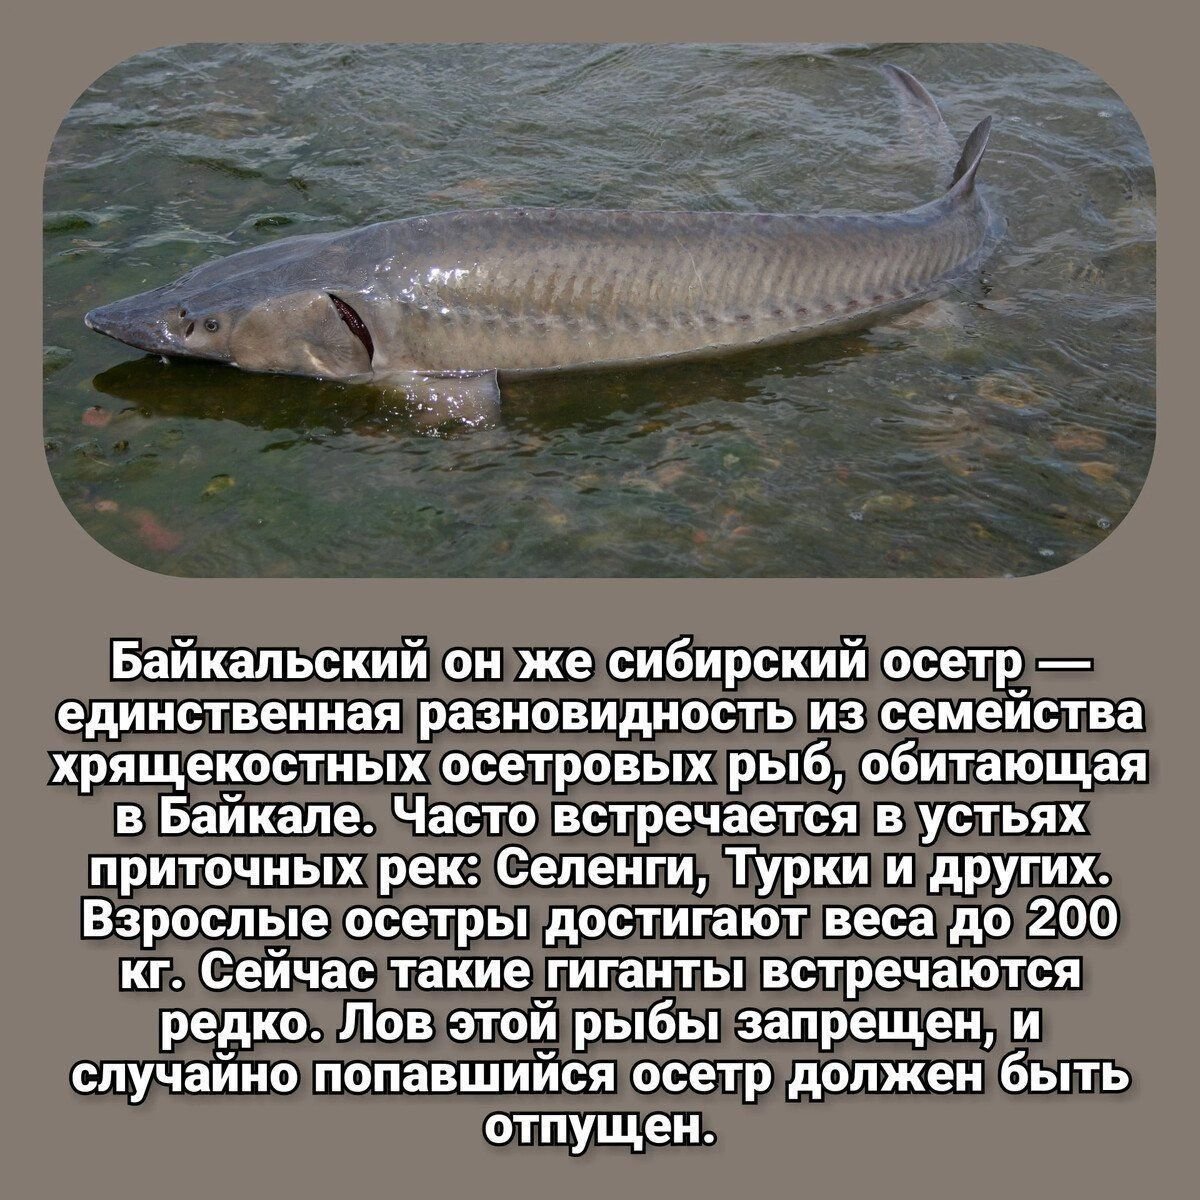 Ценная рыба 5 букв. Самые большие рыбы Байкала. Крупная рыба Байкала. Самая большая рыба в Байкале. Самая крупная рыба Байкала.